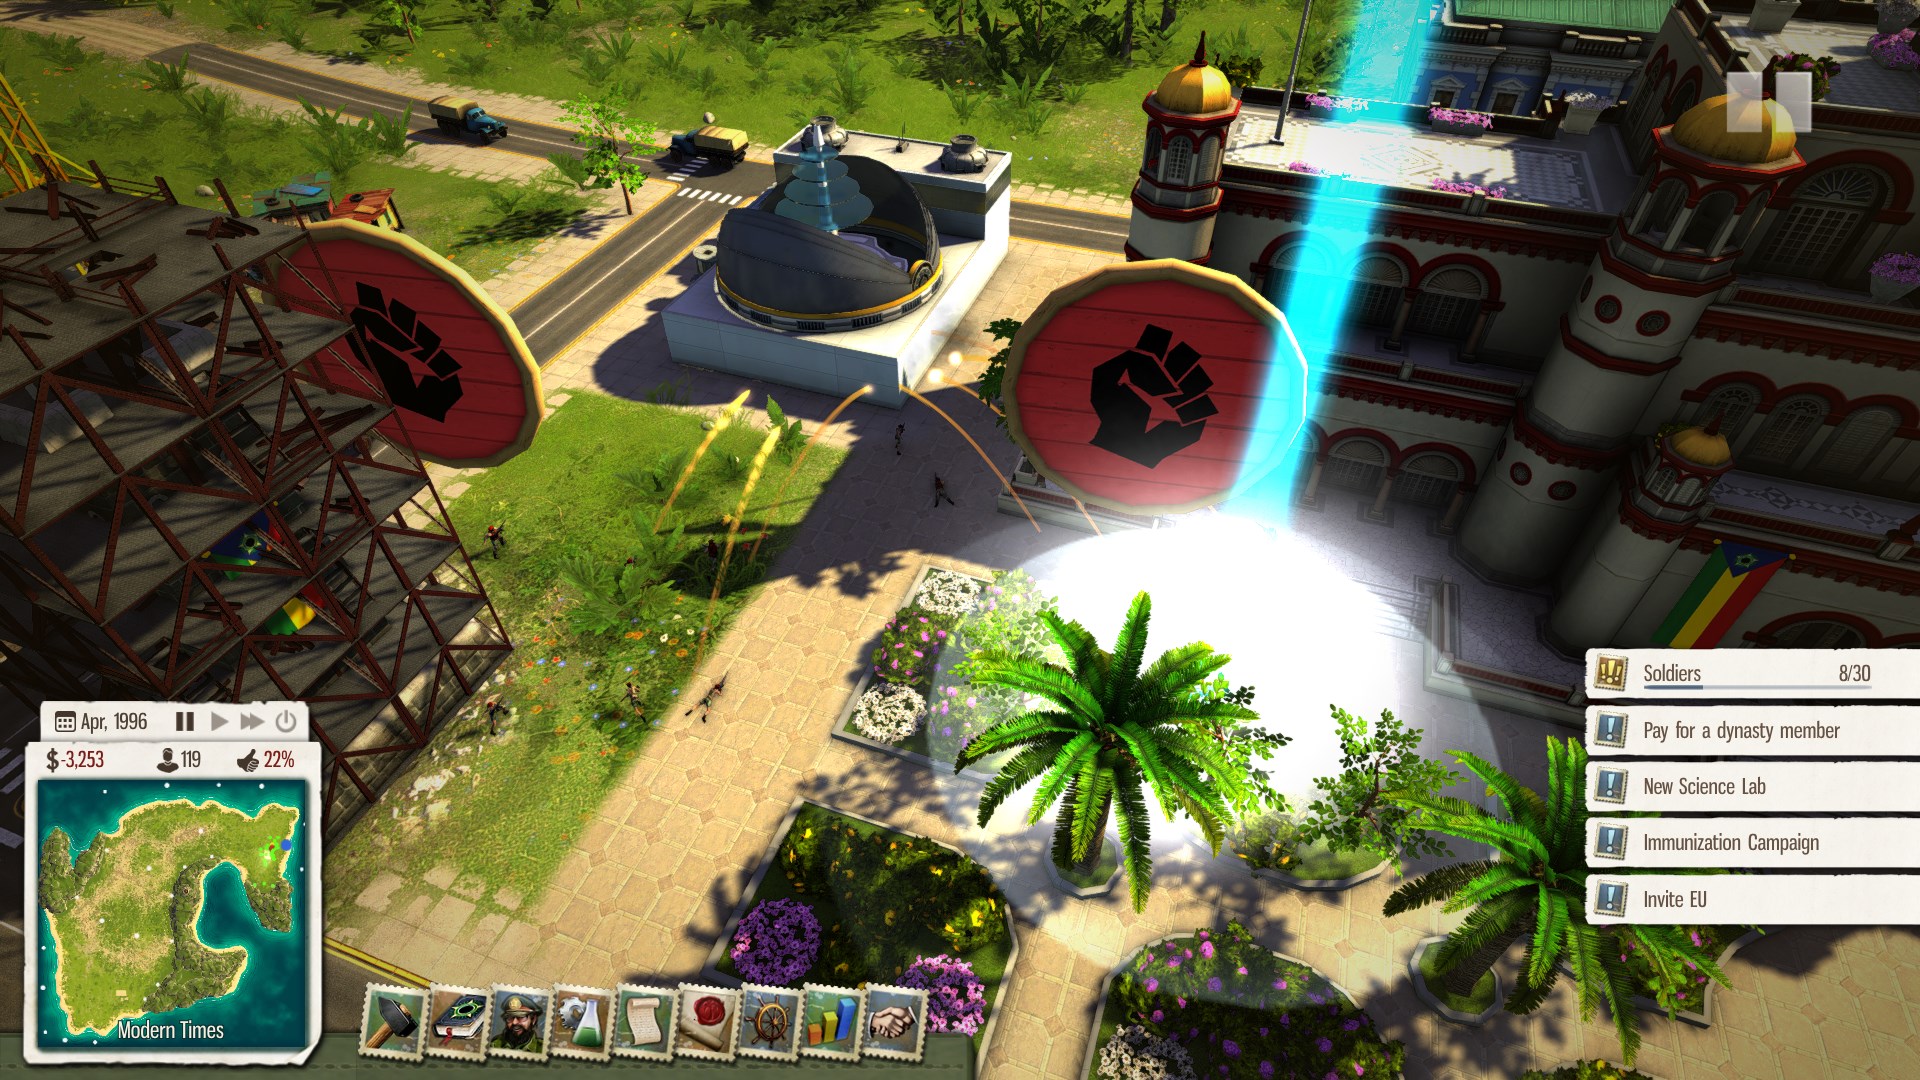 Tropico 5  Supervillain (Steam key) -- RU